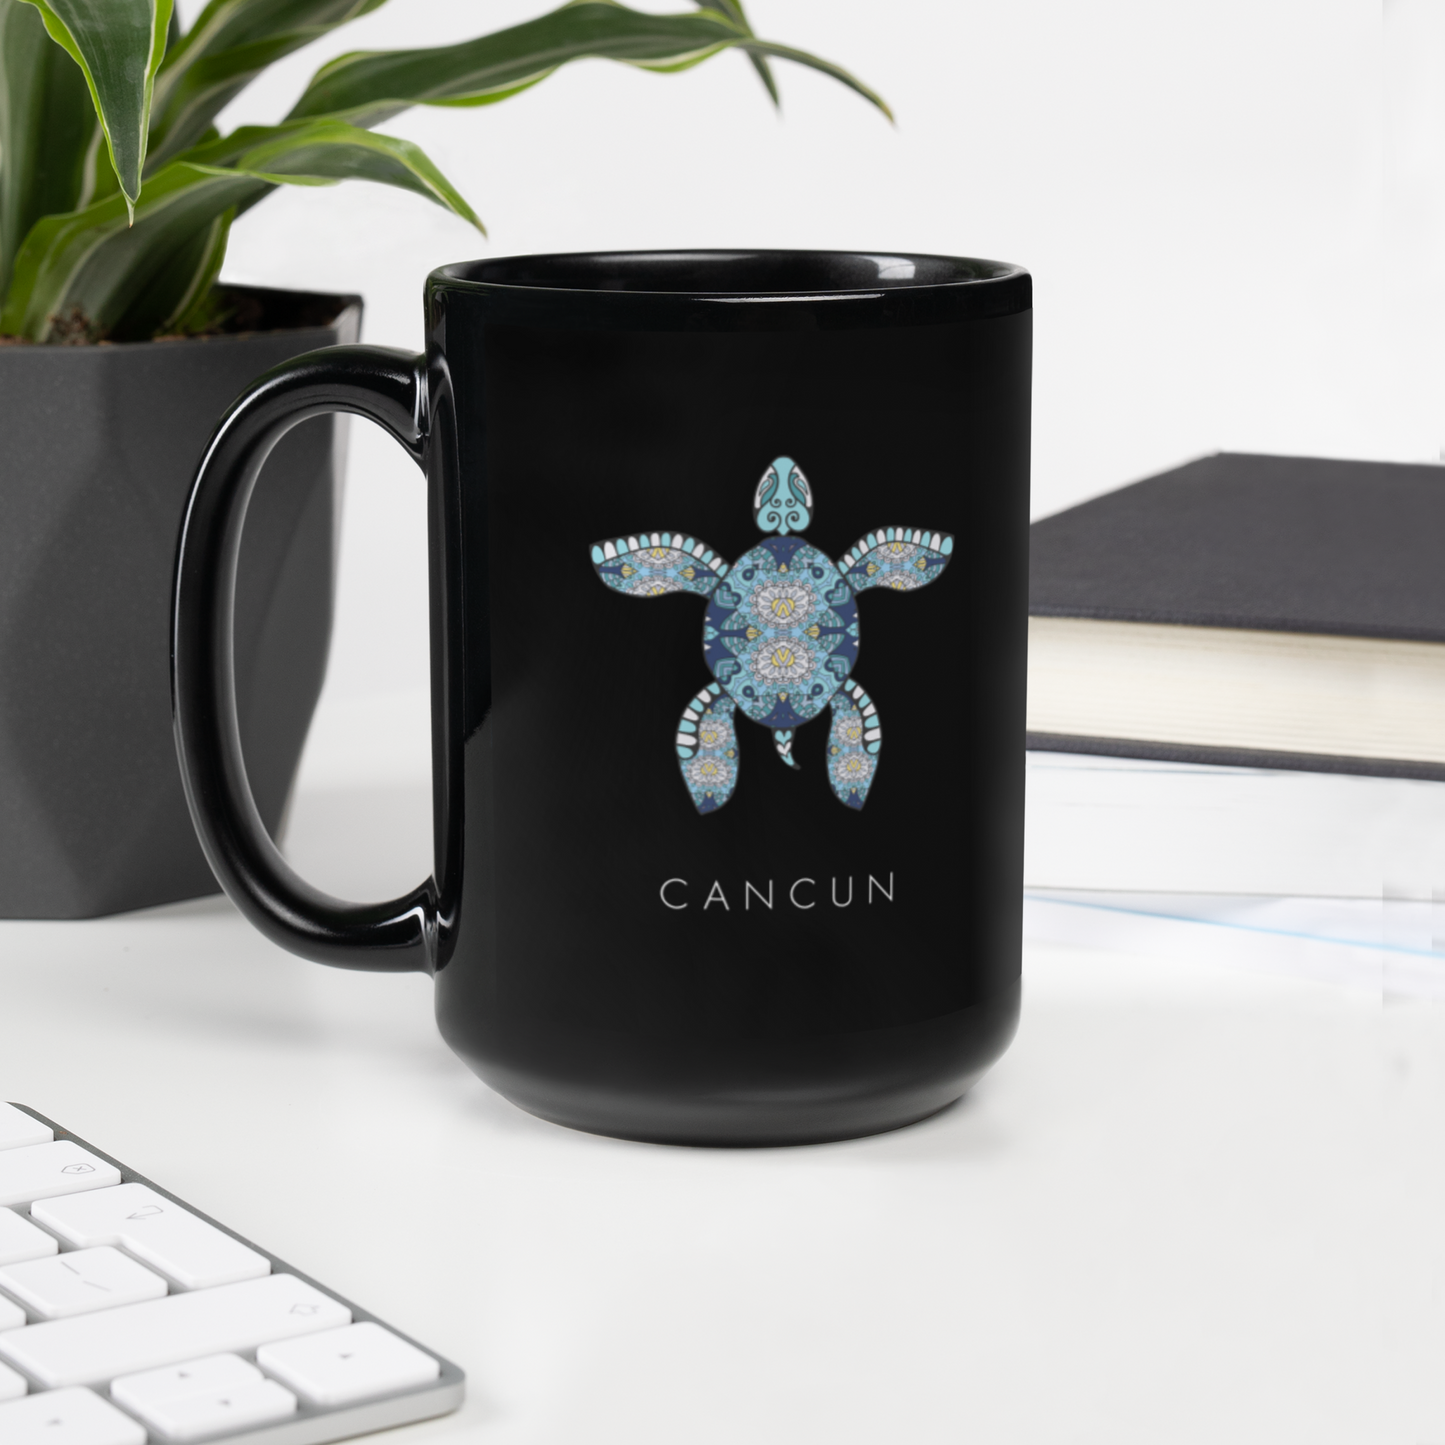 CANCUN - Ocean Sea Ornate Turtle Mug